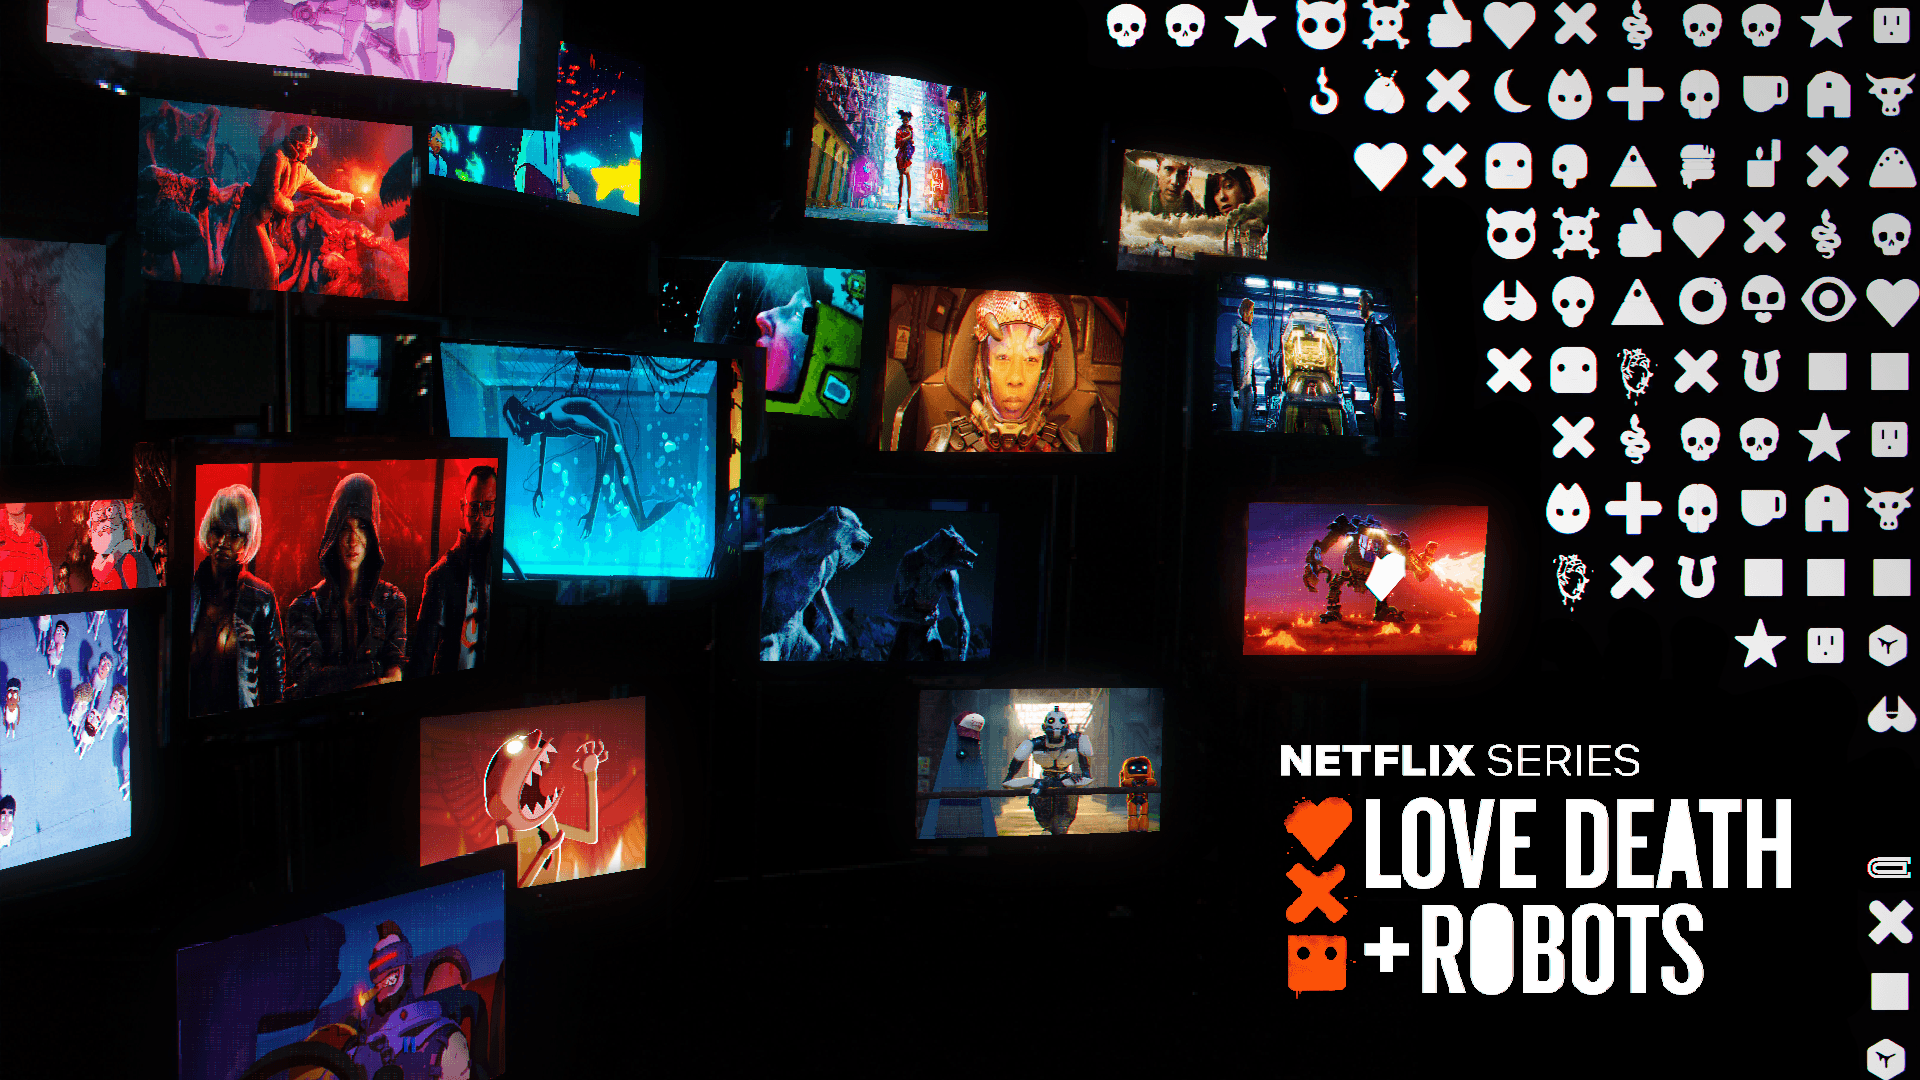 Here's a little LoveDeath Robots wallpaper I made. Enjoy